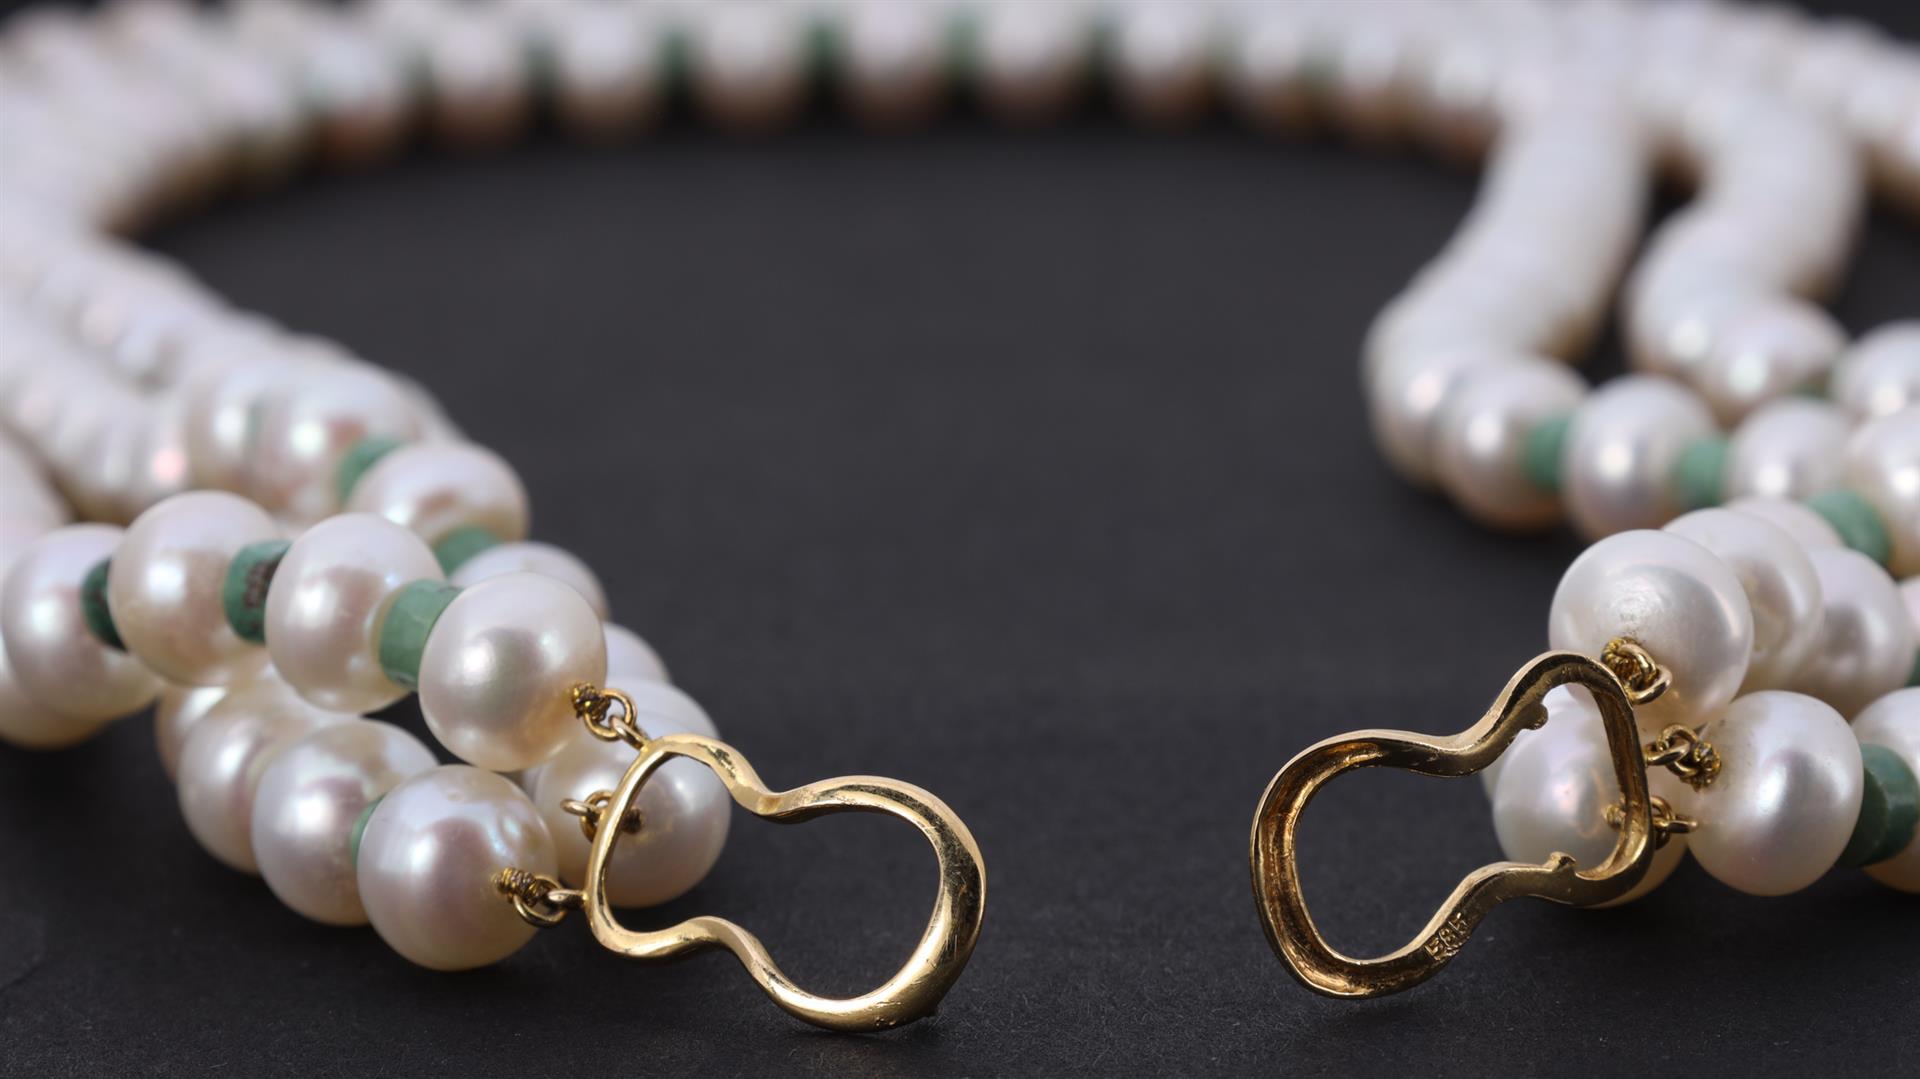 Three-Strand Pearl & Antique Peruvian Bead Necklace